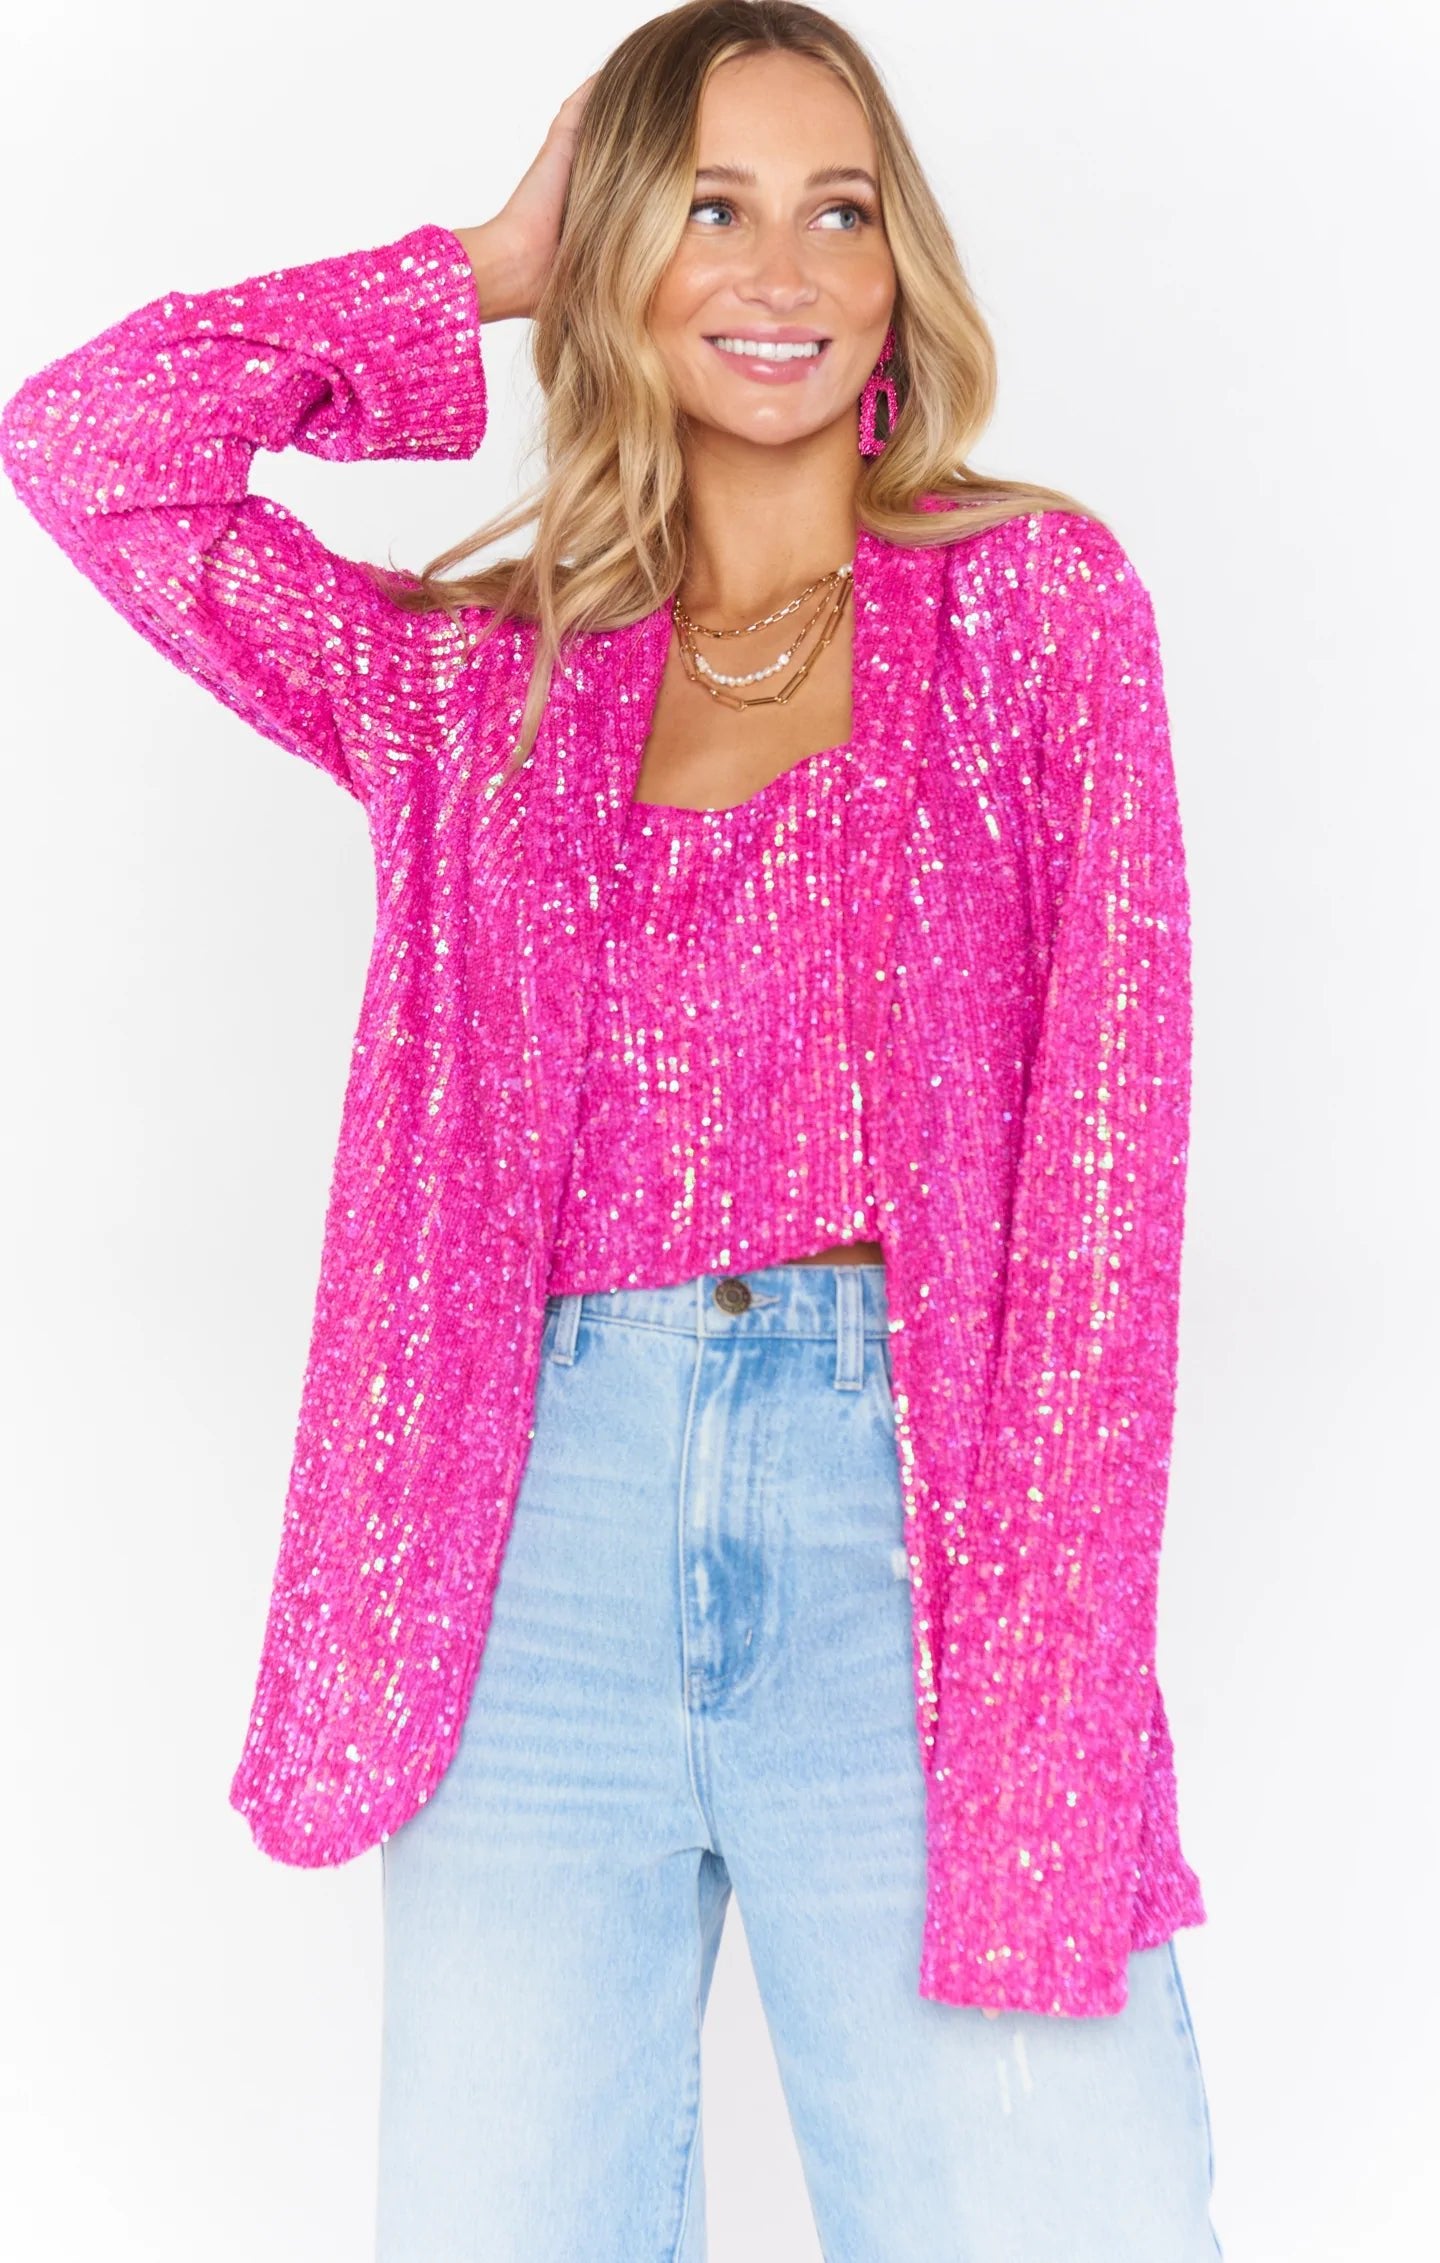 Shop Show Me Your Mumu Dance Blazer Pink Disco Sequin - Premium Jacket from Show Me Your Mumu Online now at Spoiled Brat 